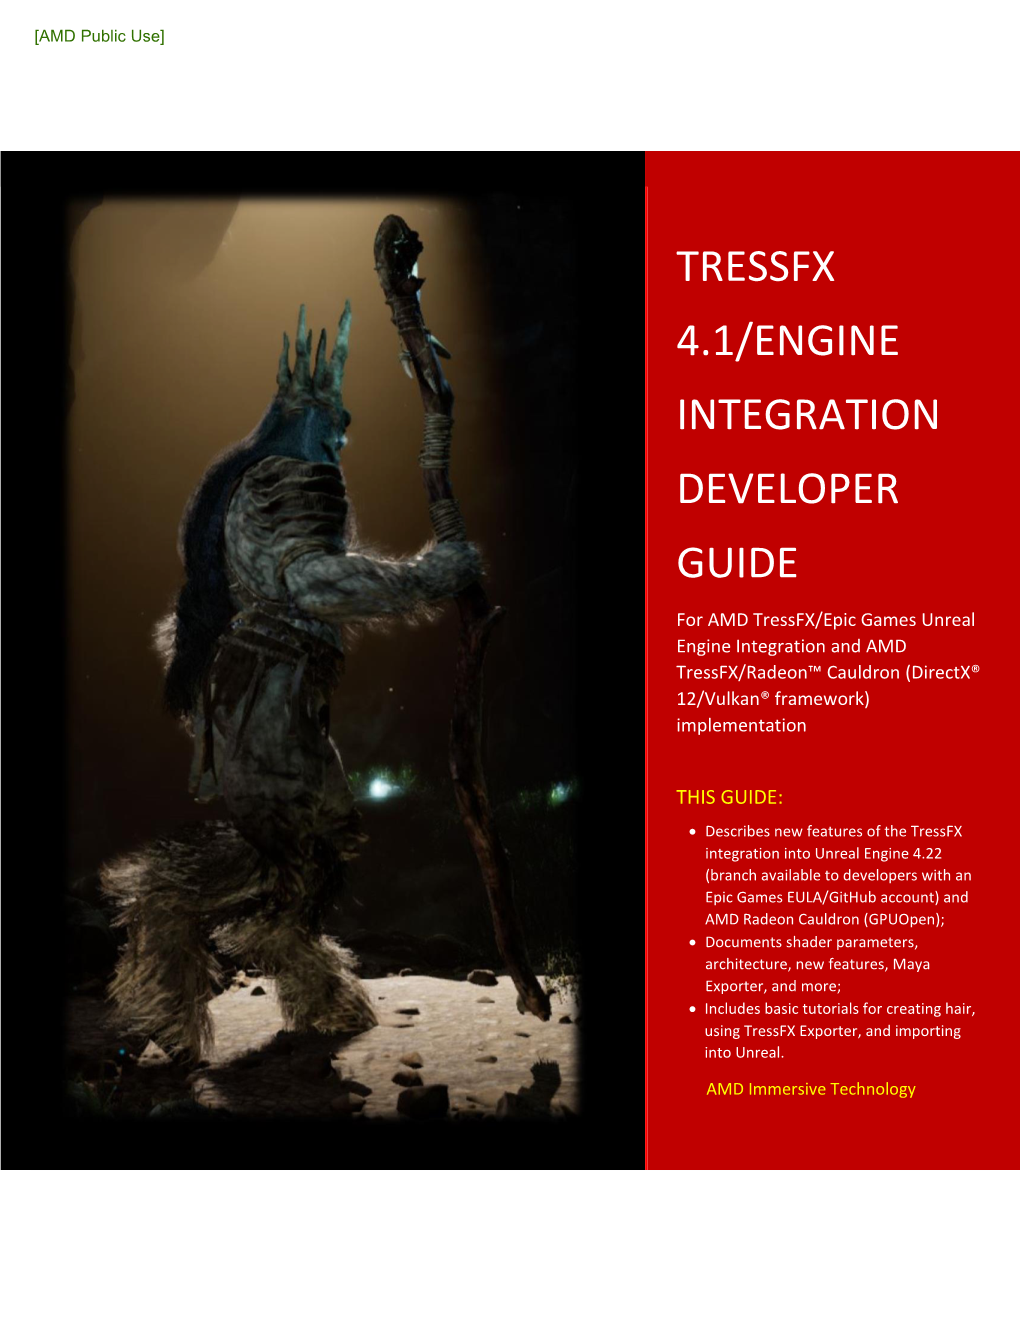 Tressfx 4.1/Engine Integration Developer Guide